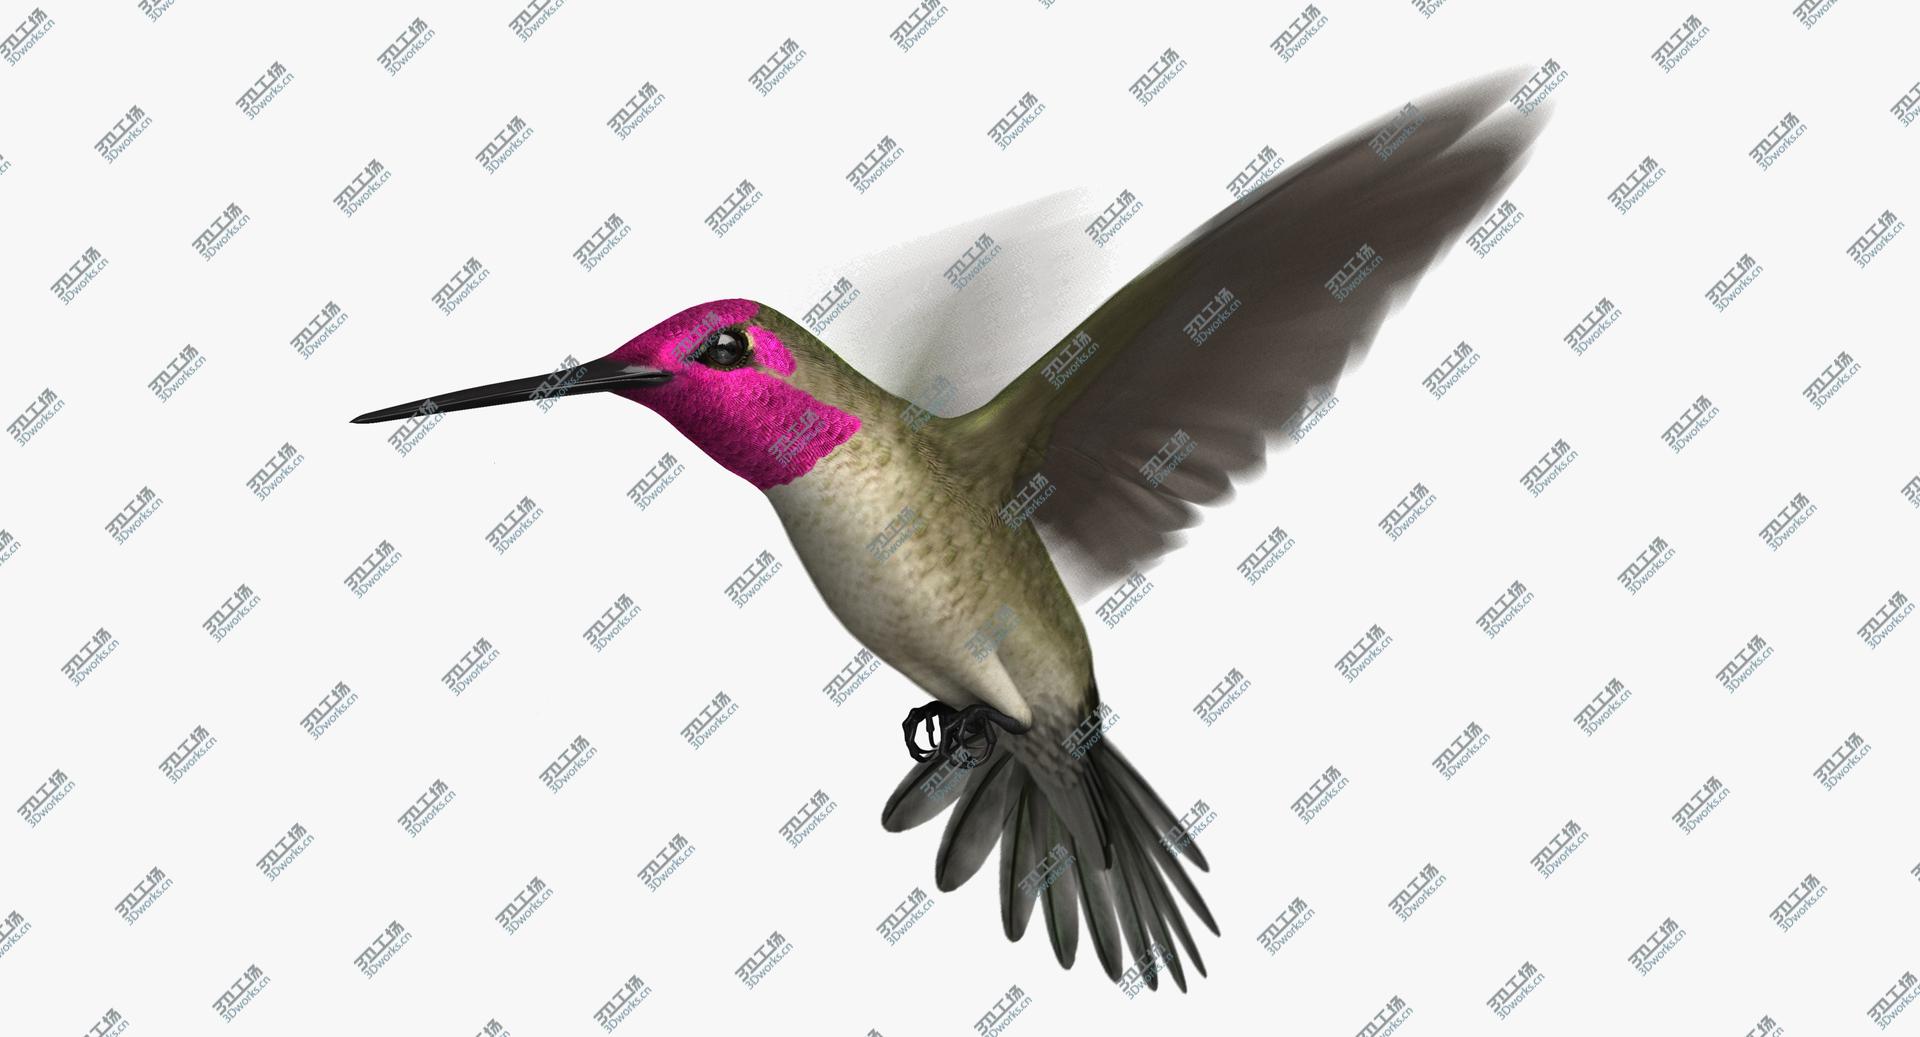 images/goods_img/202105071/3D Anna's Hummingbird (Animated) model/2.jpg